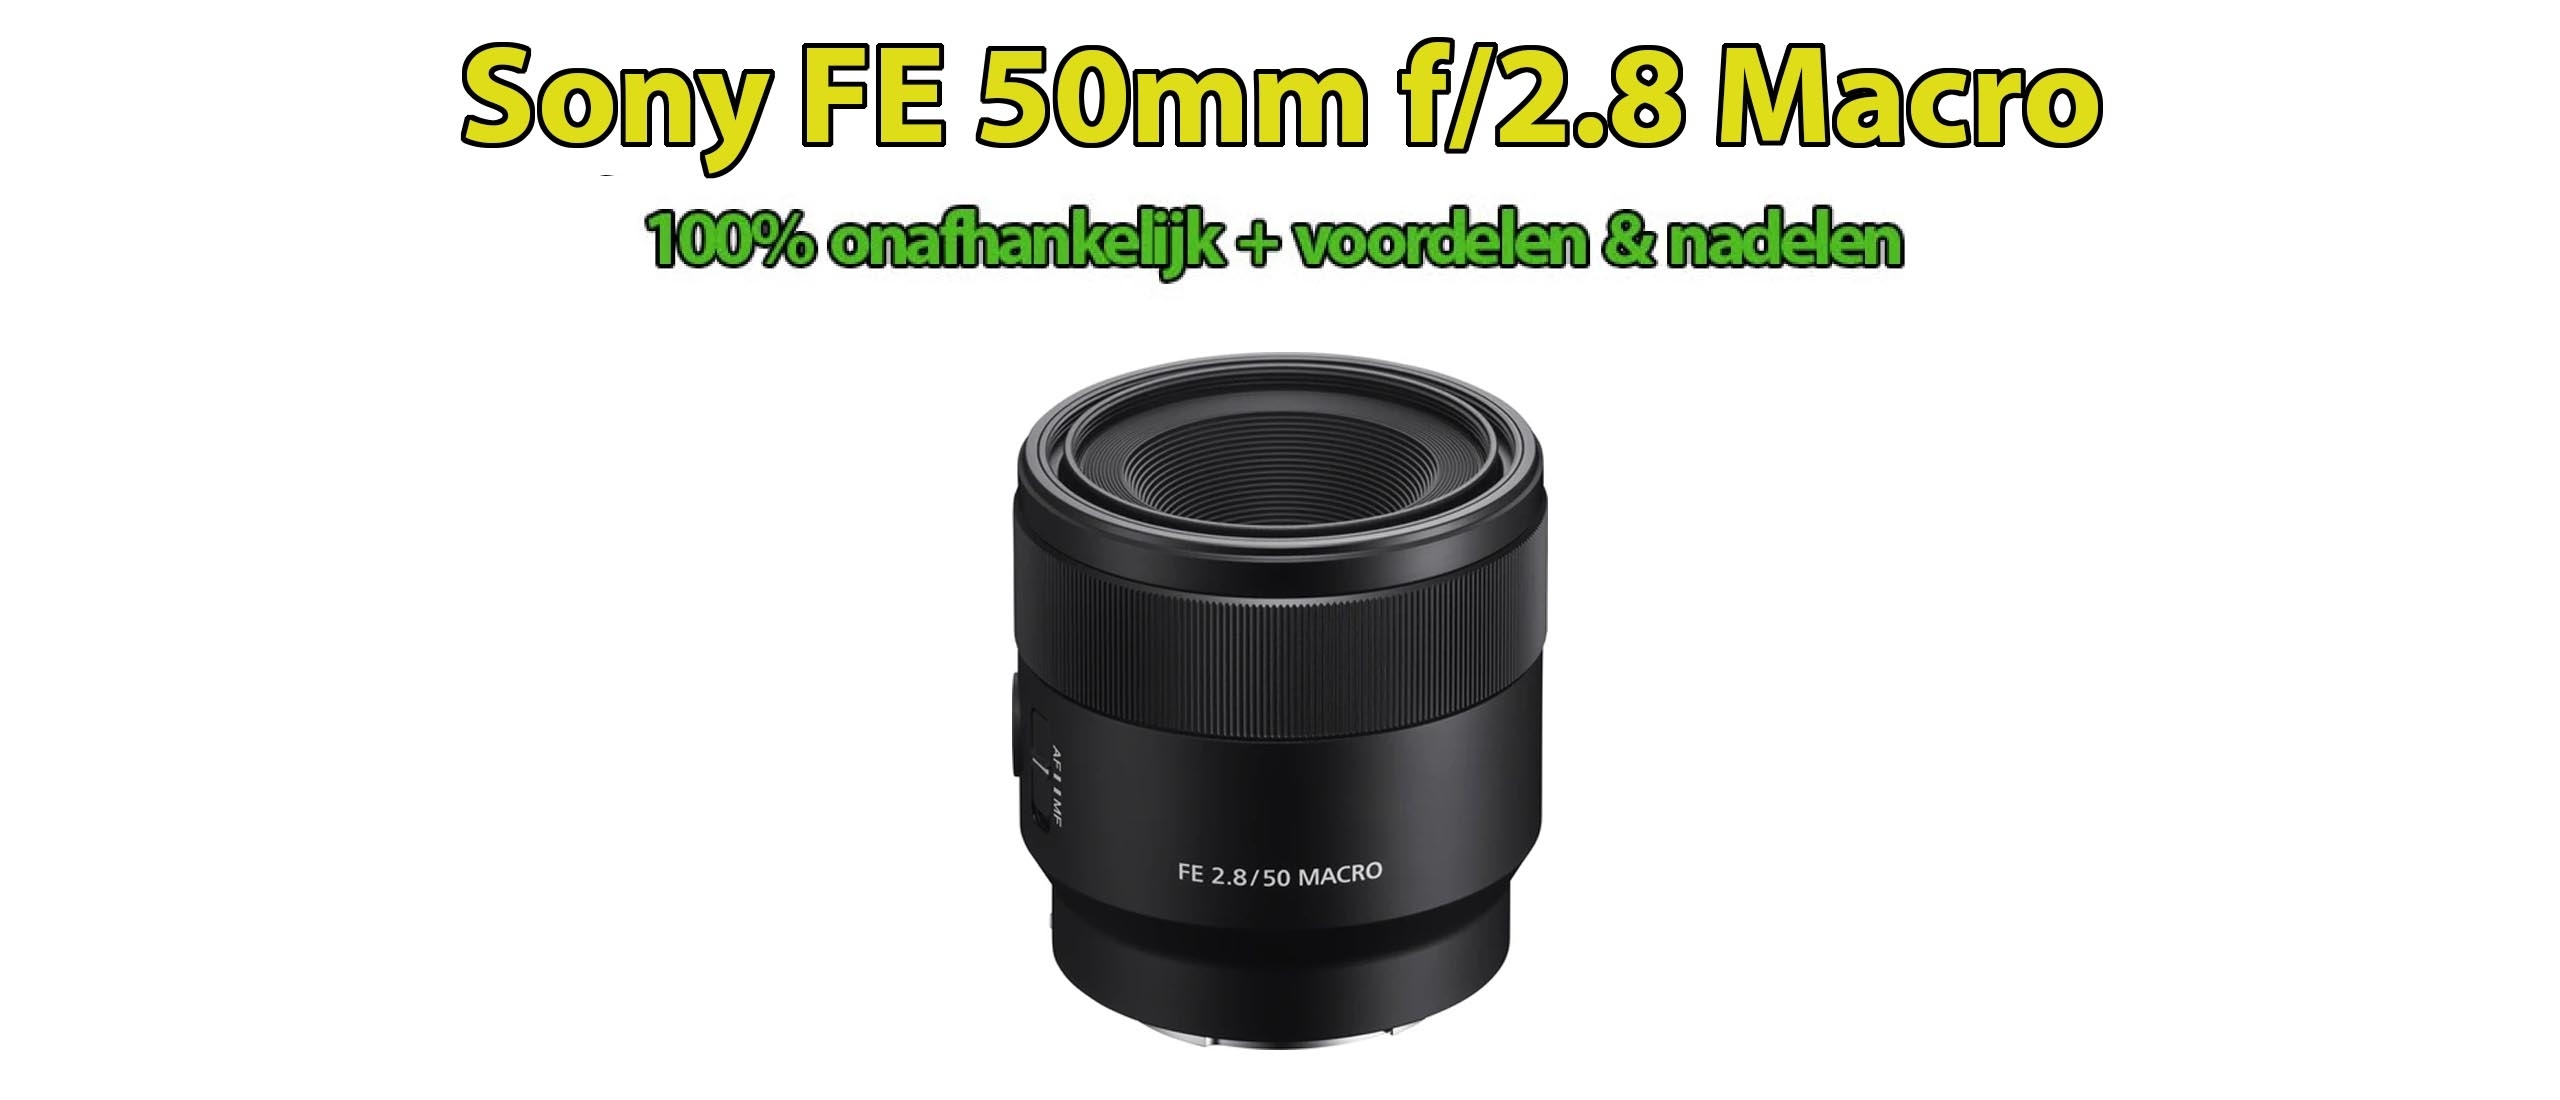 Sony FE 50mm f/2.8 macro review